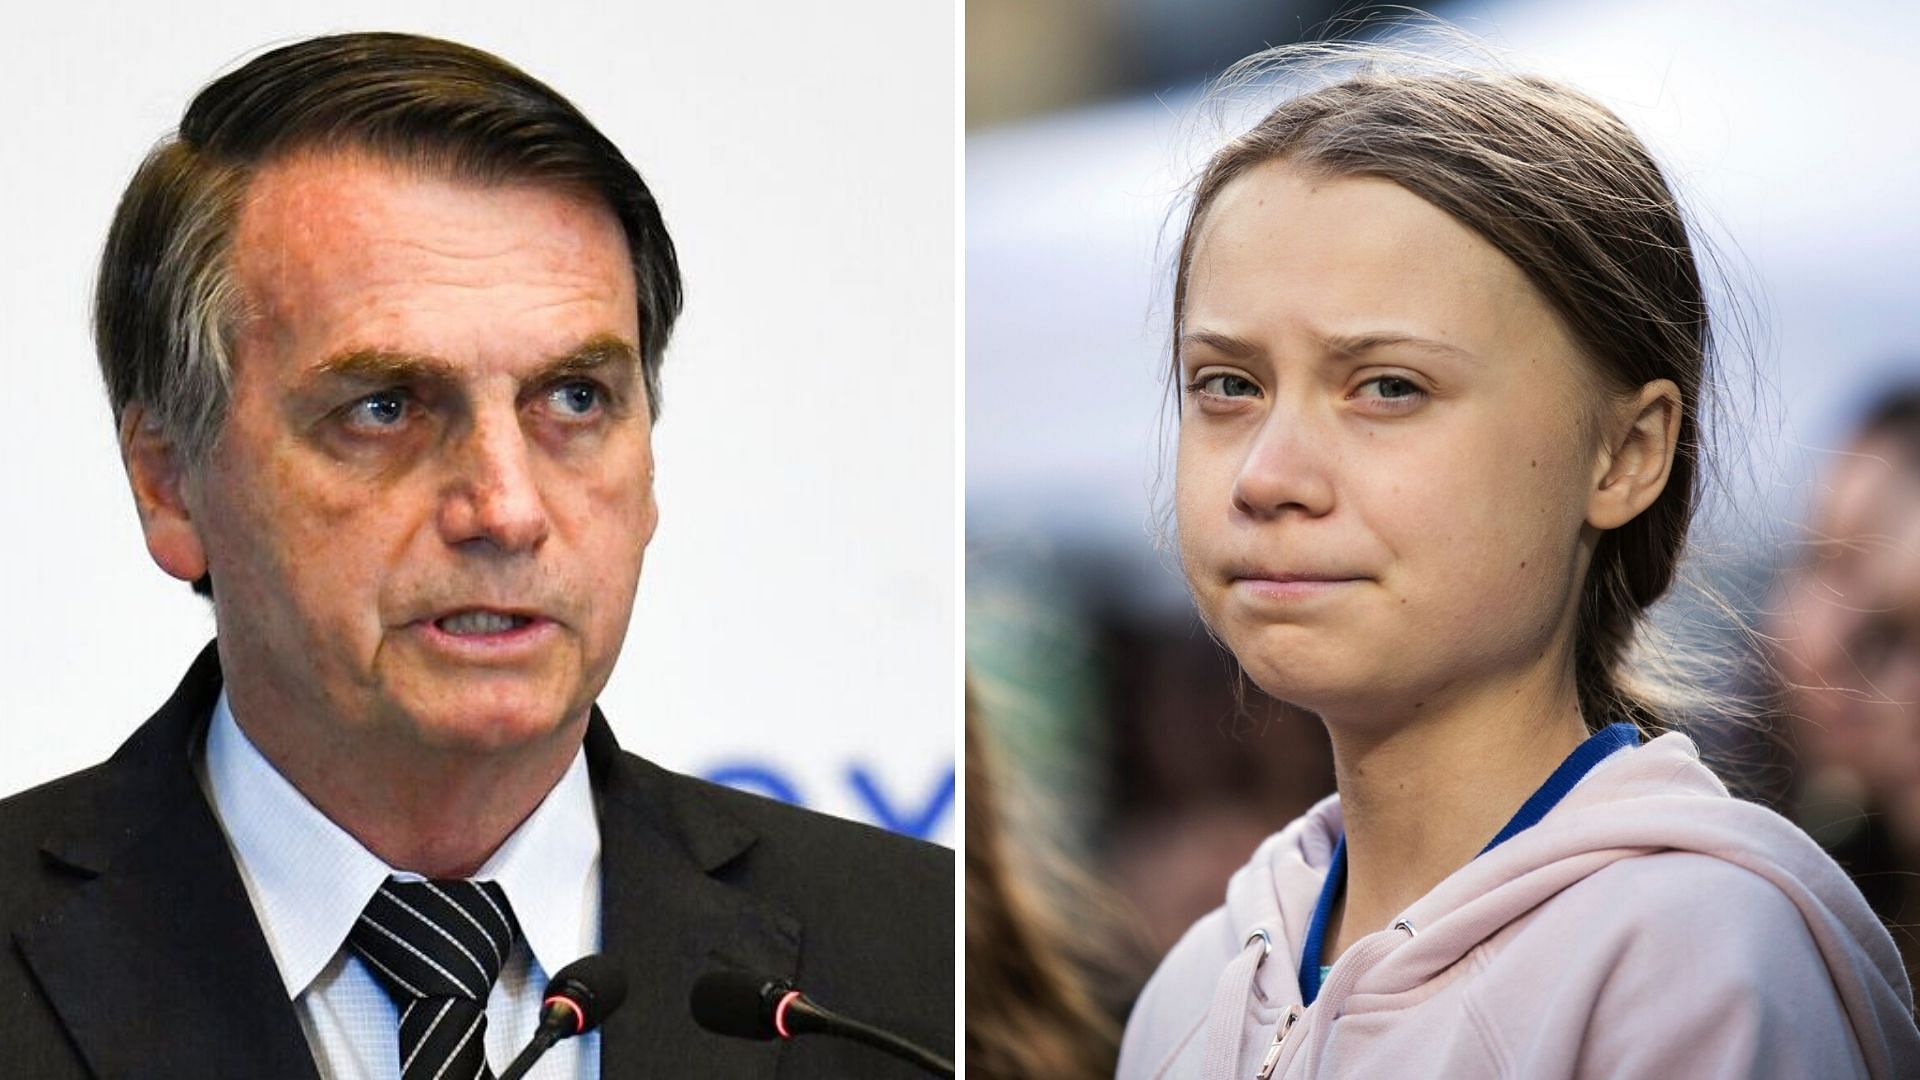 Bolsonaro questioned the coverage news media have given Greta Thunberg.